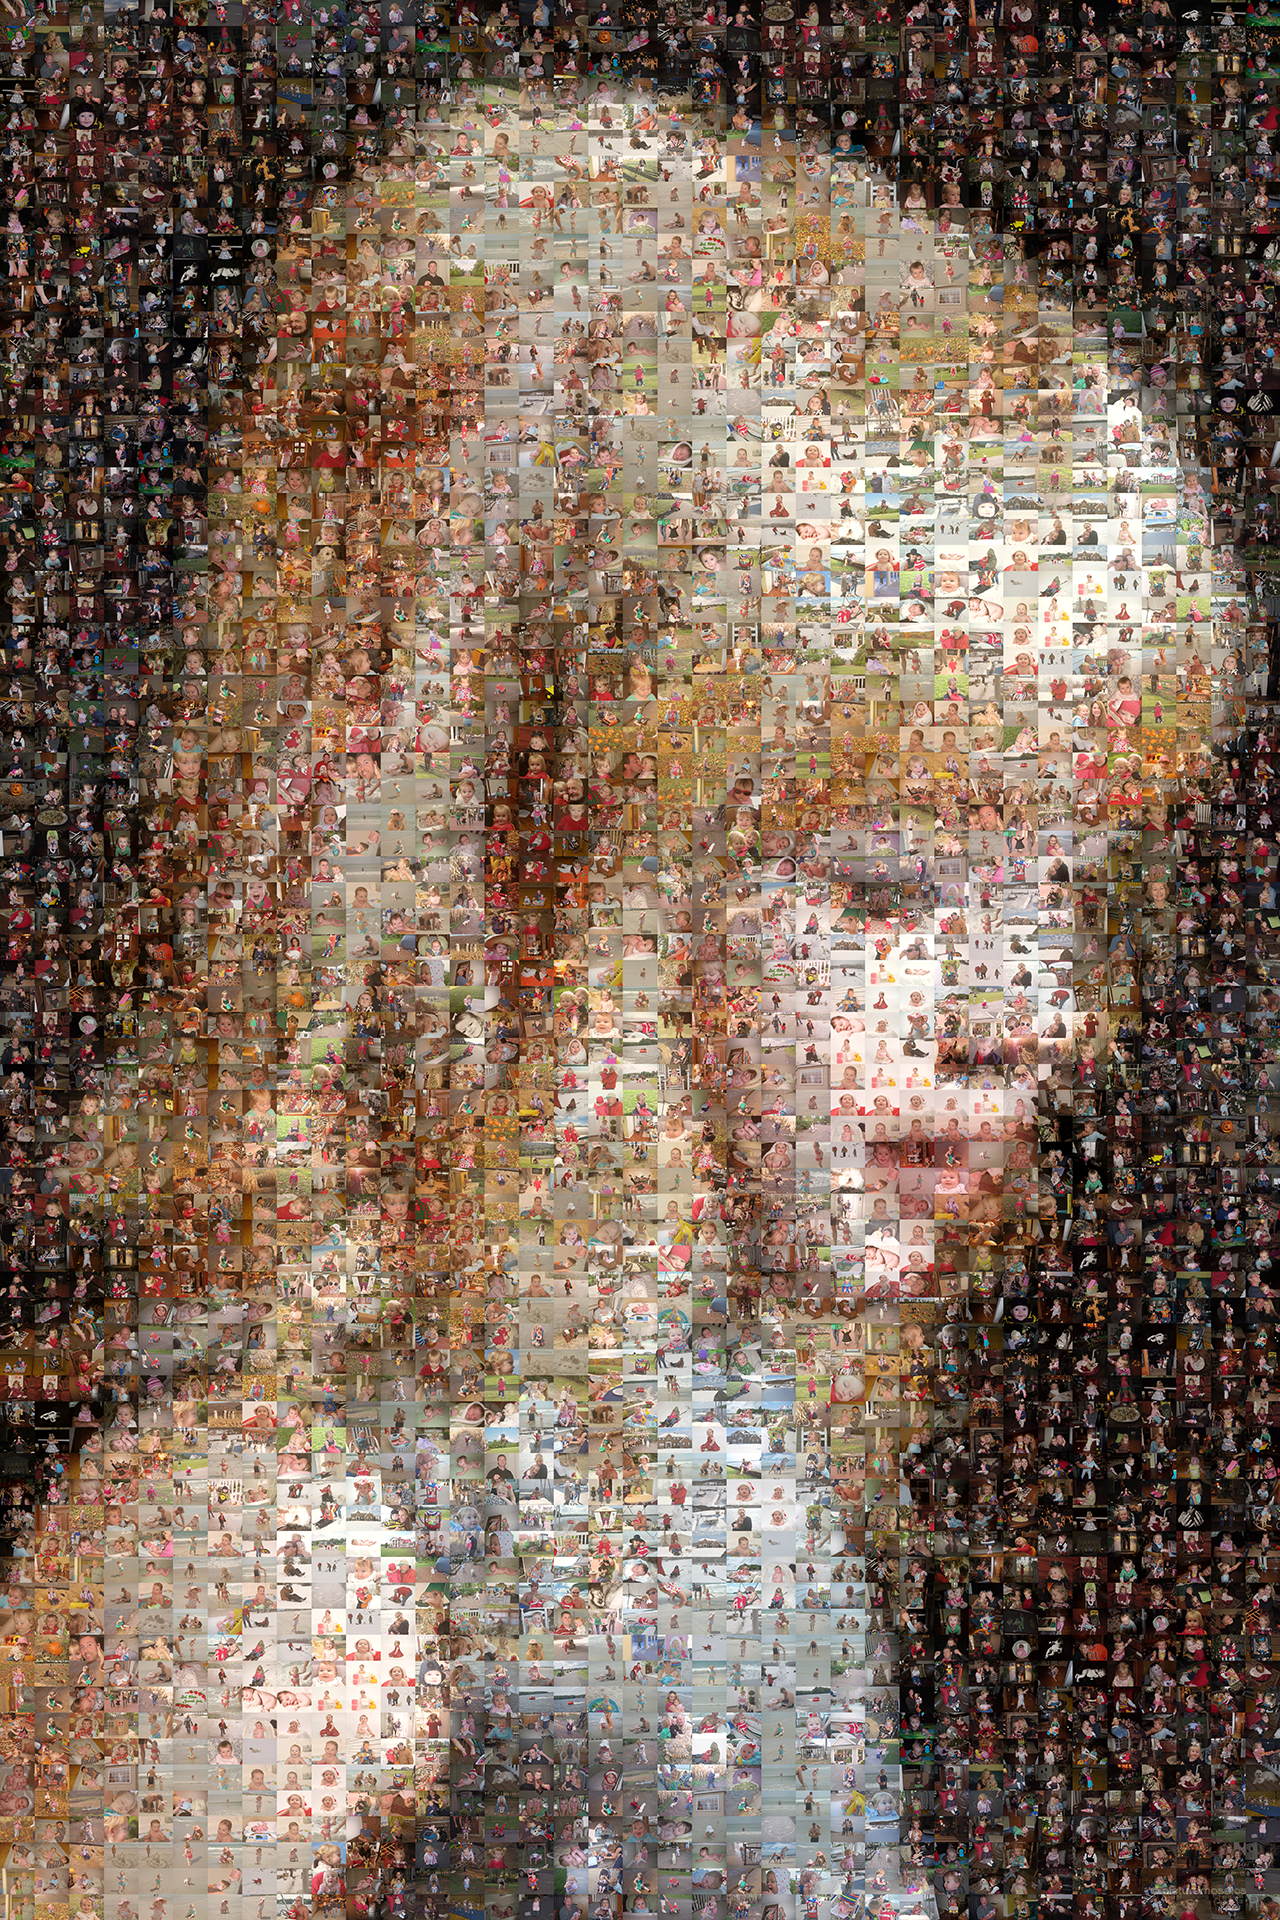 photo mosaic created using over 2,400 family photos